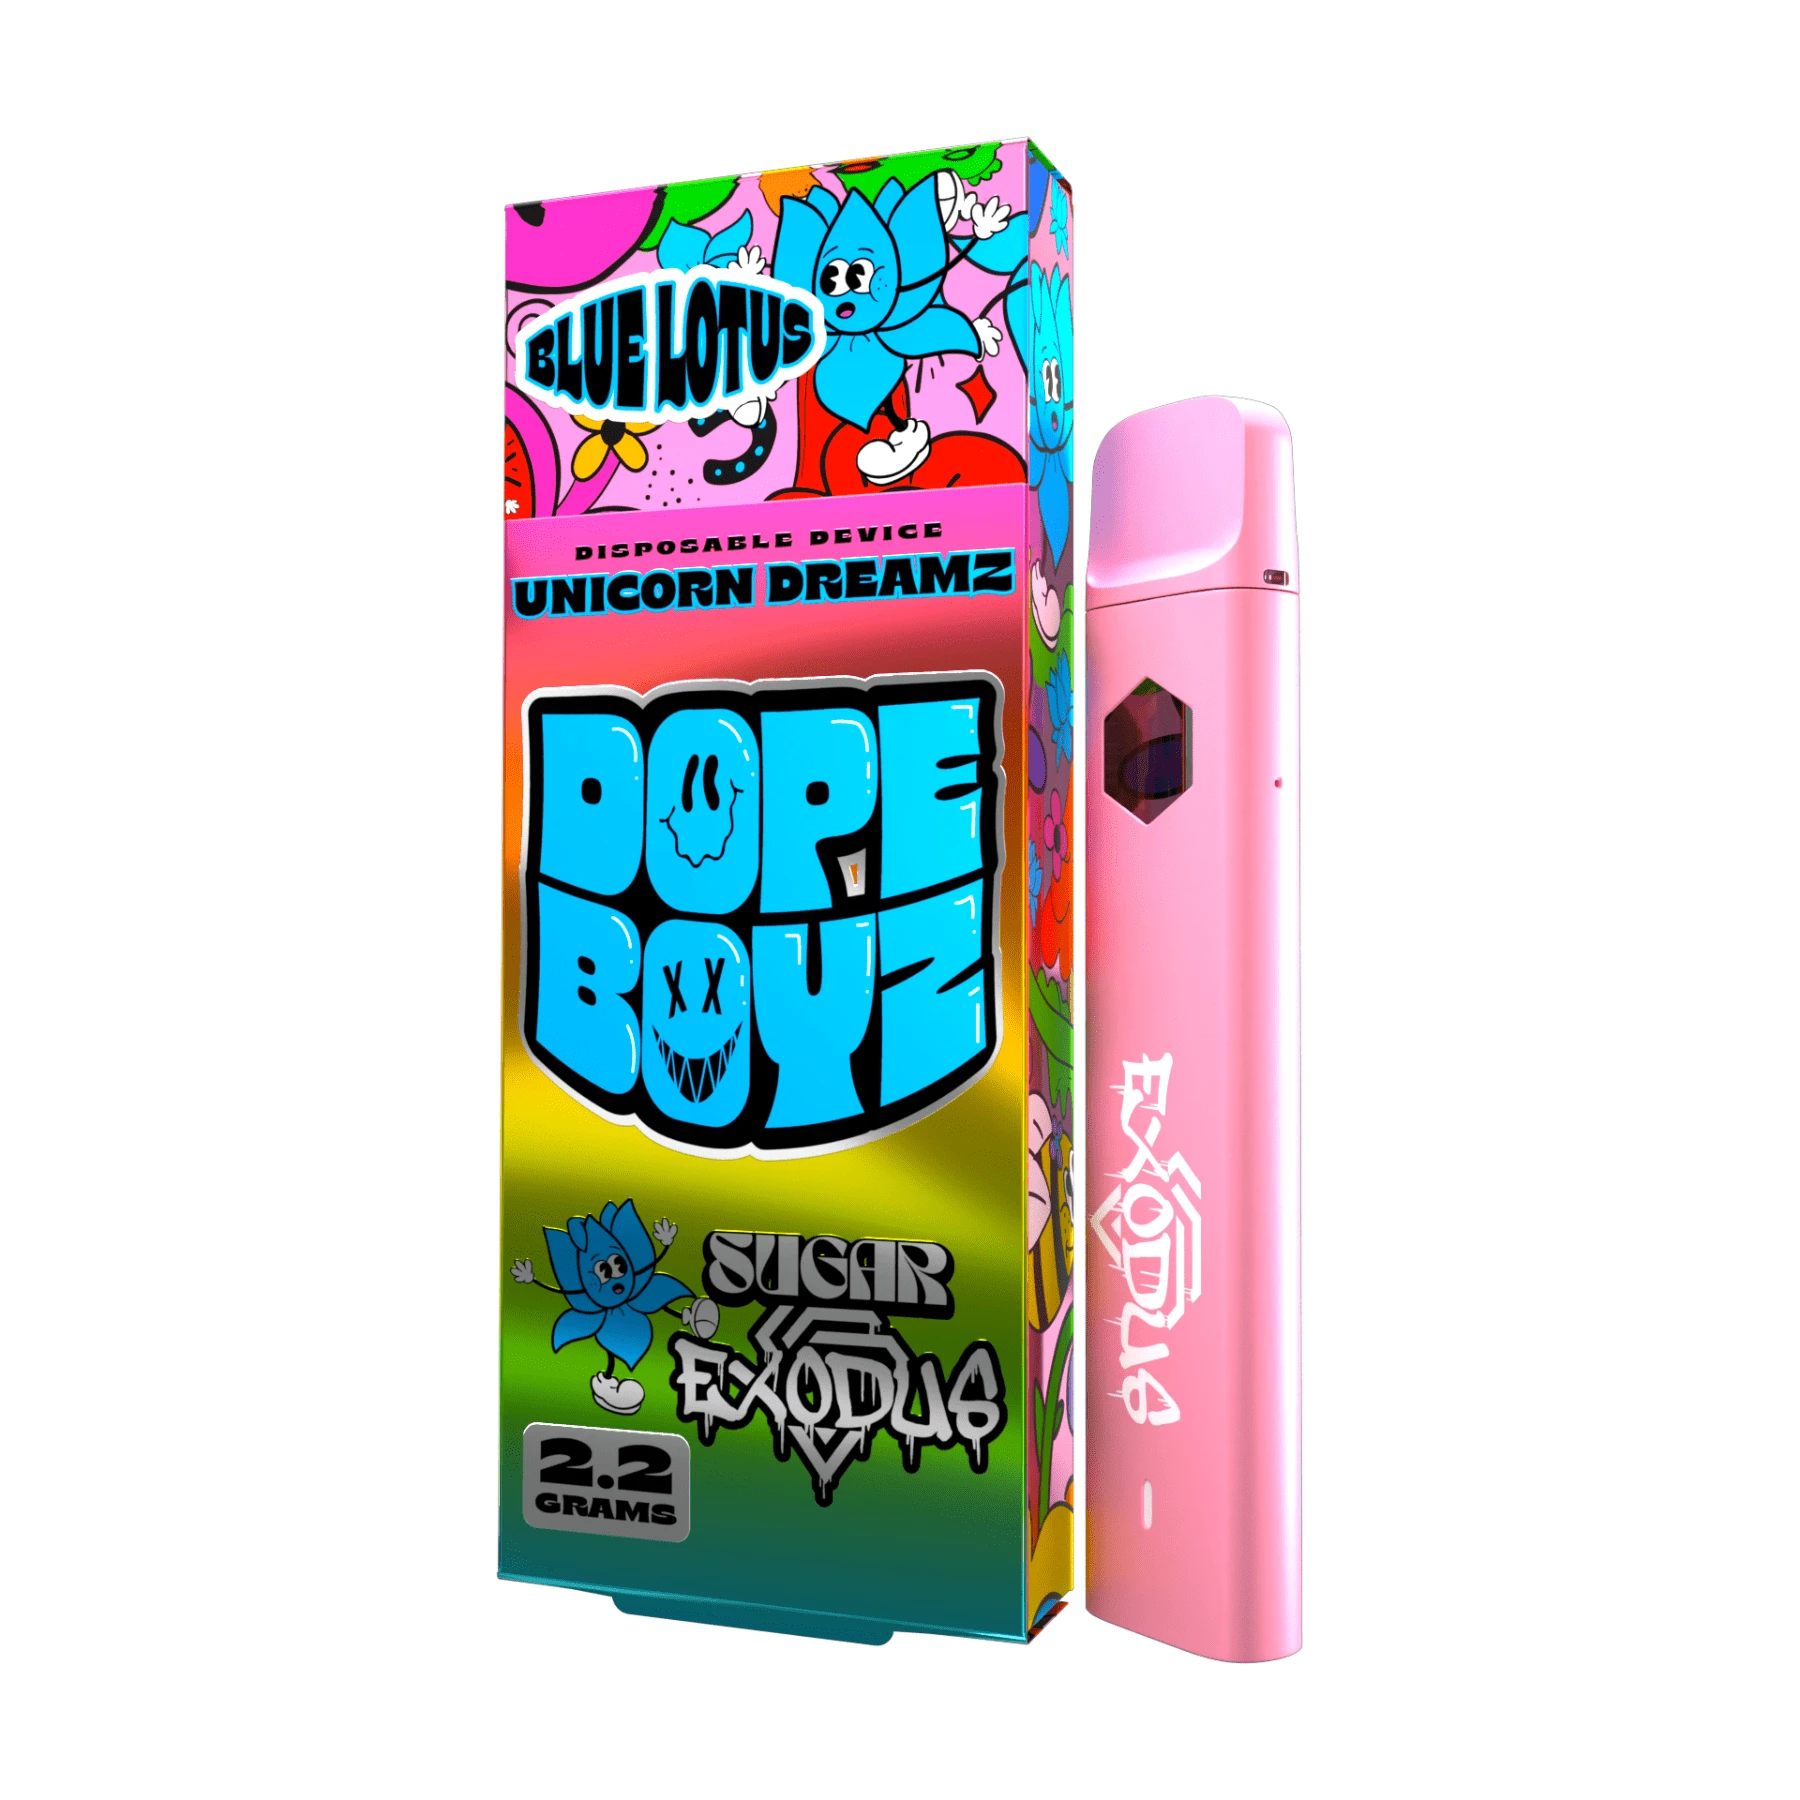 A pink box with a pink sugar exodus dope boyz blue lotus disposables (2. 2g) e - cigarette.